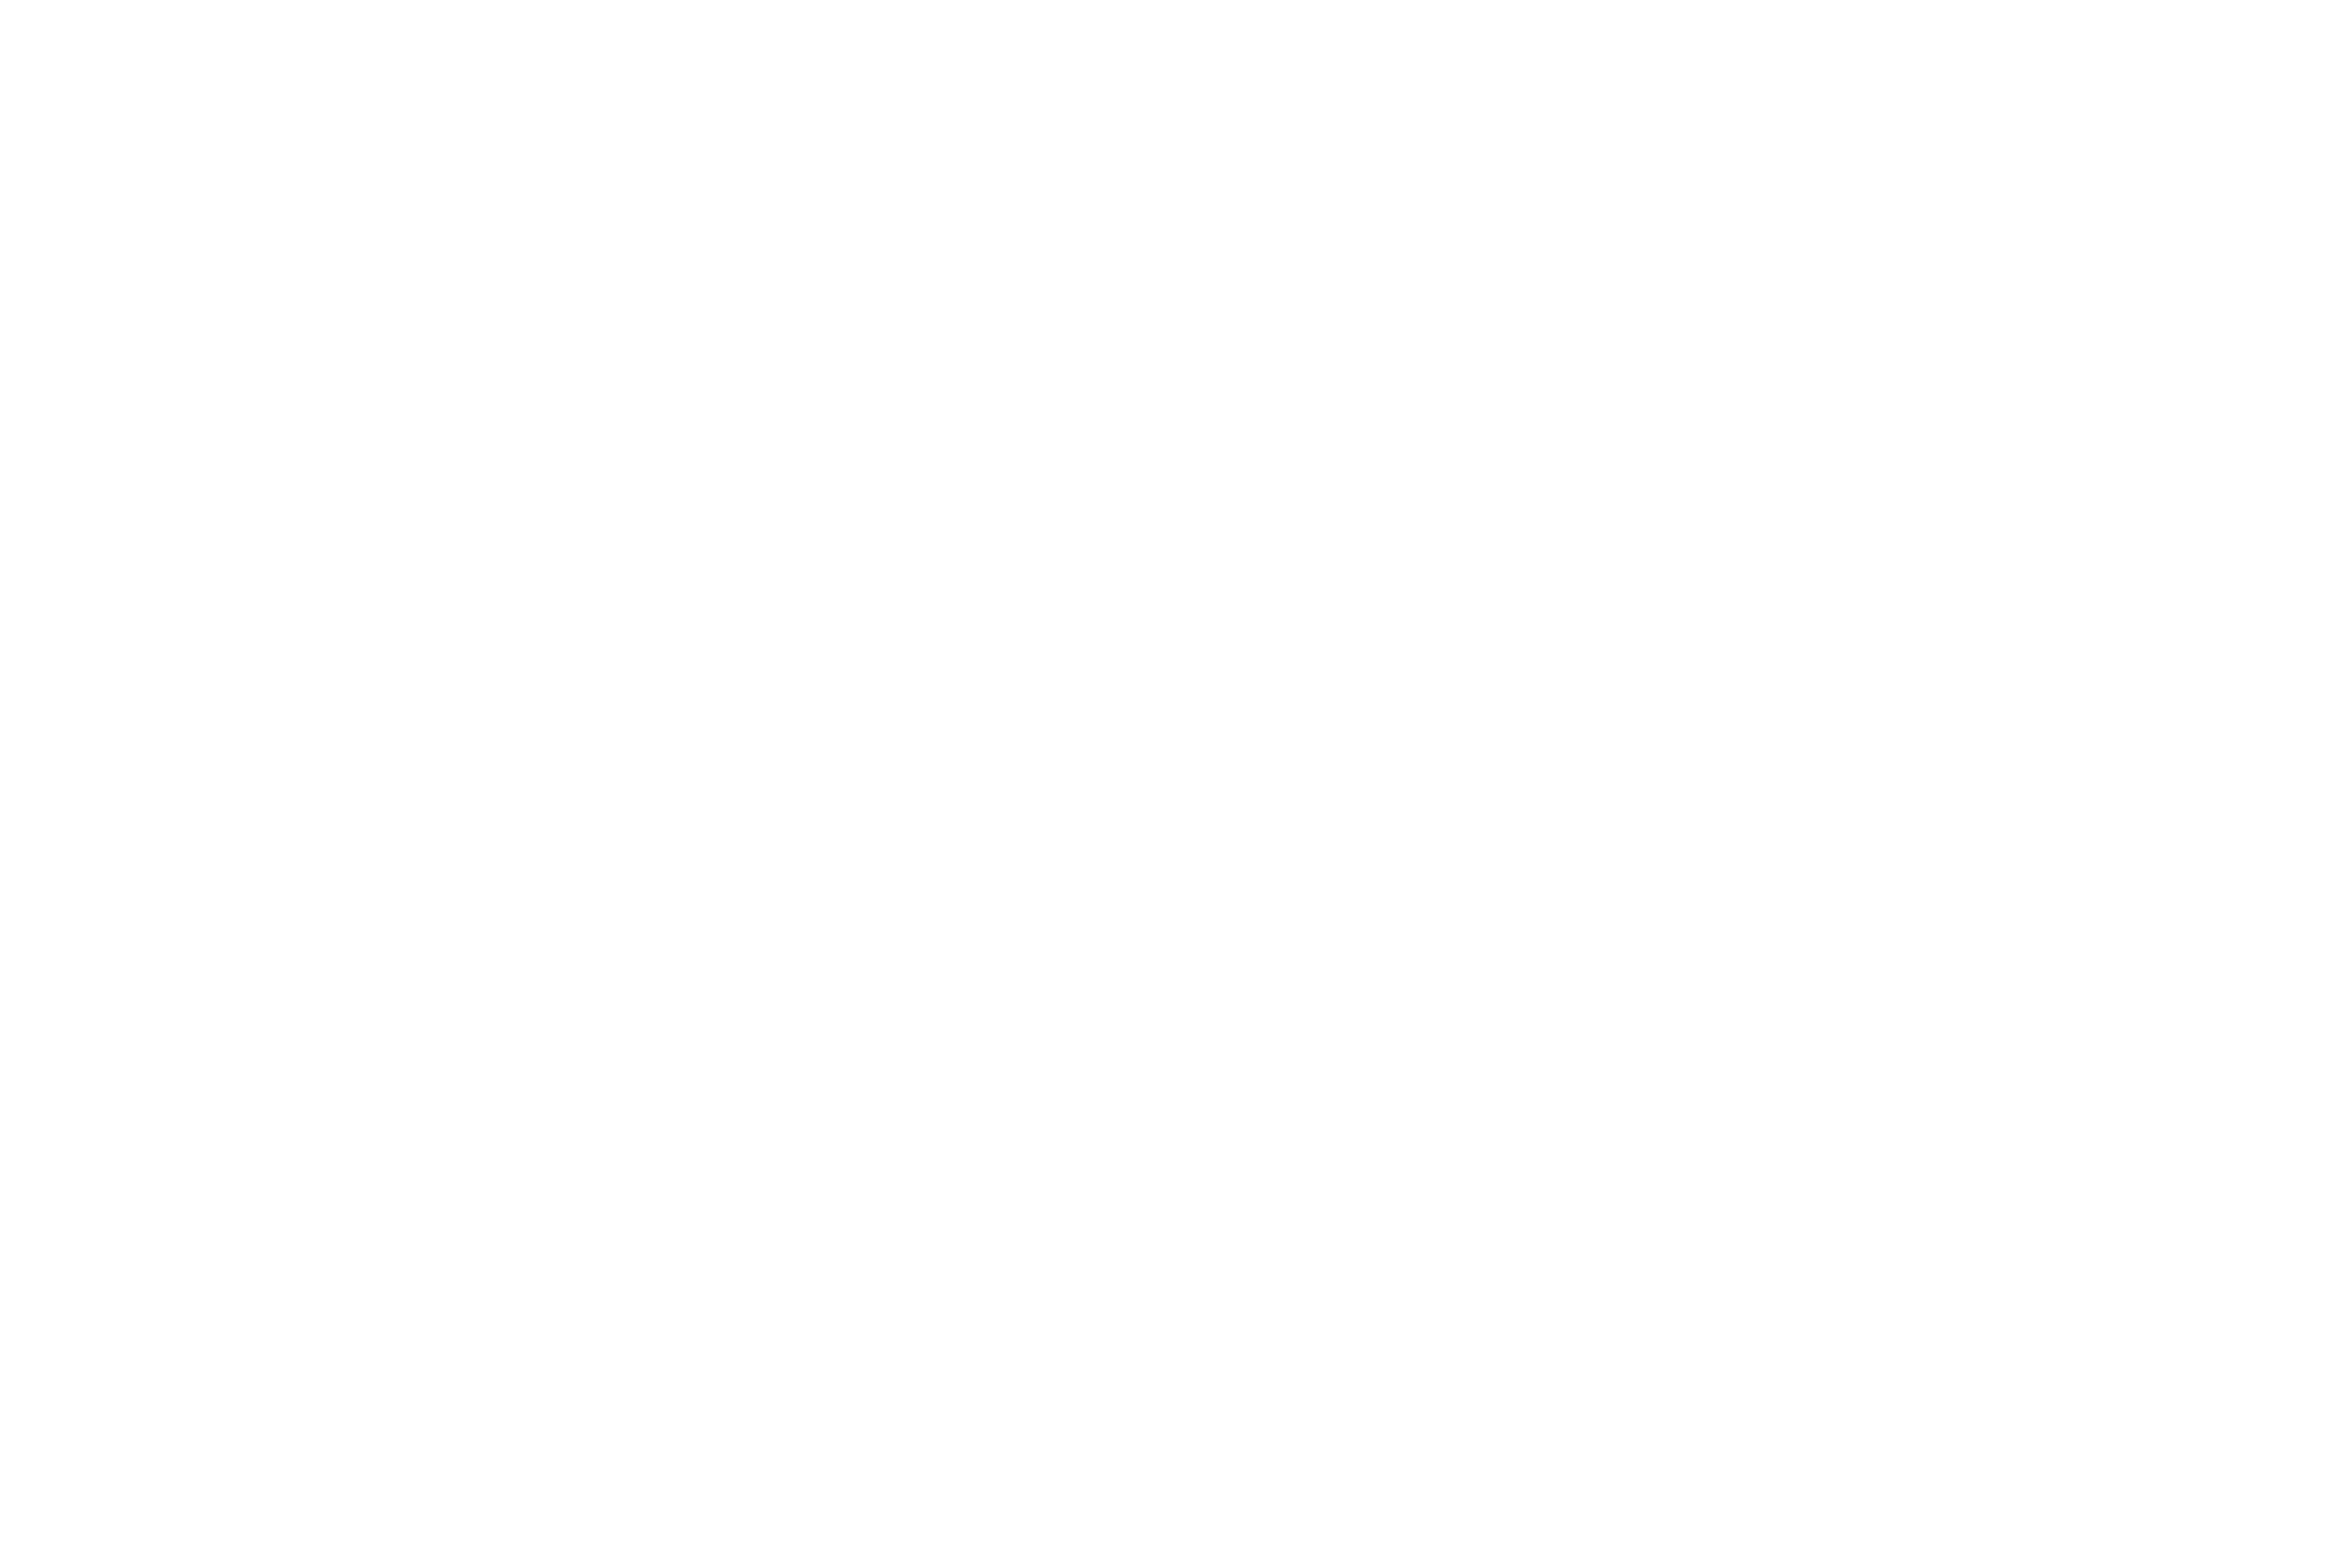 Description of the medical tube cutting machine KL-BV: Minimal deformation pressure: For soft and elastic hoses